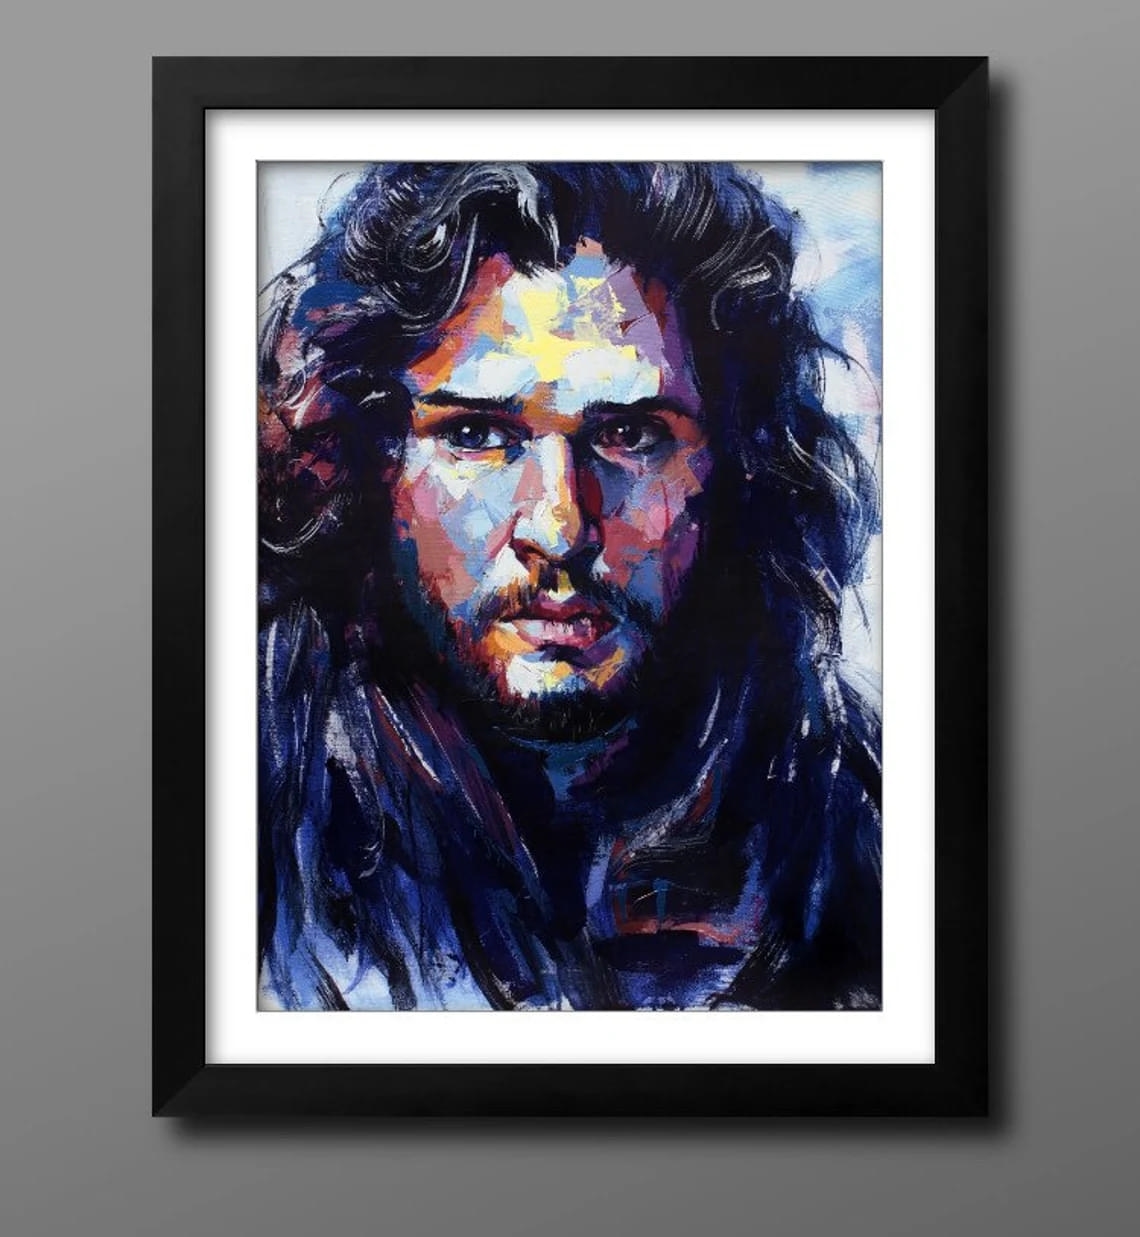 "Jon Snow" - Game of Thrones Portraits Artwork Sample on Wall